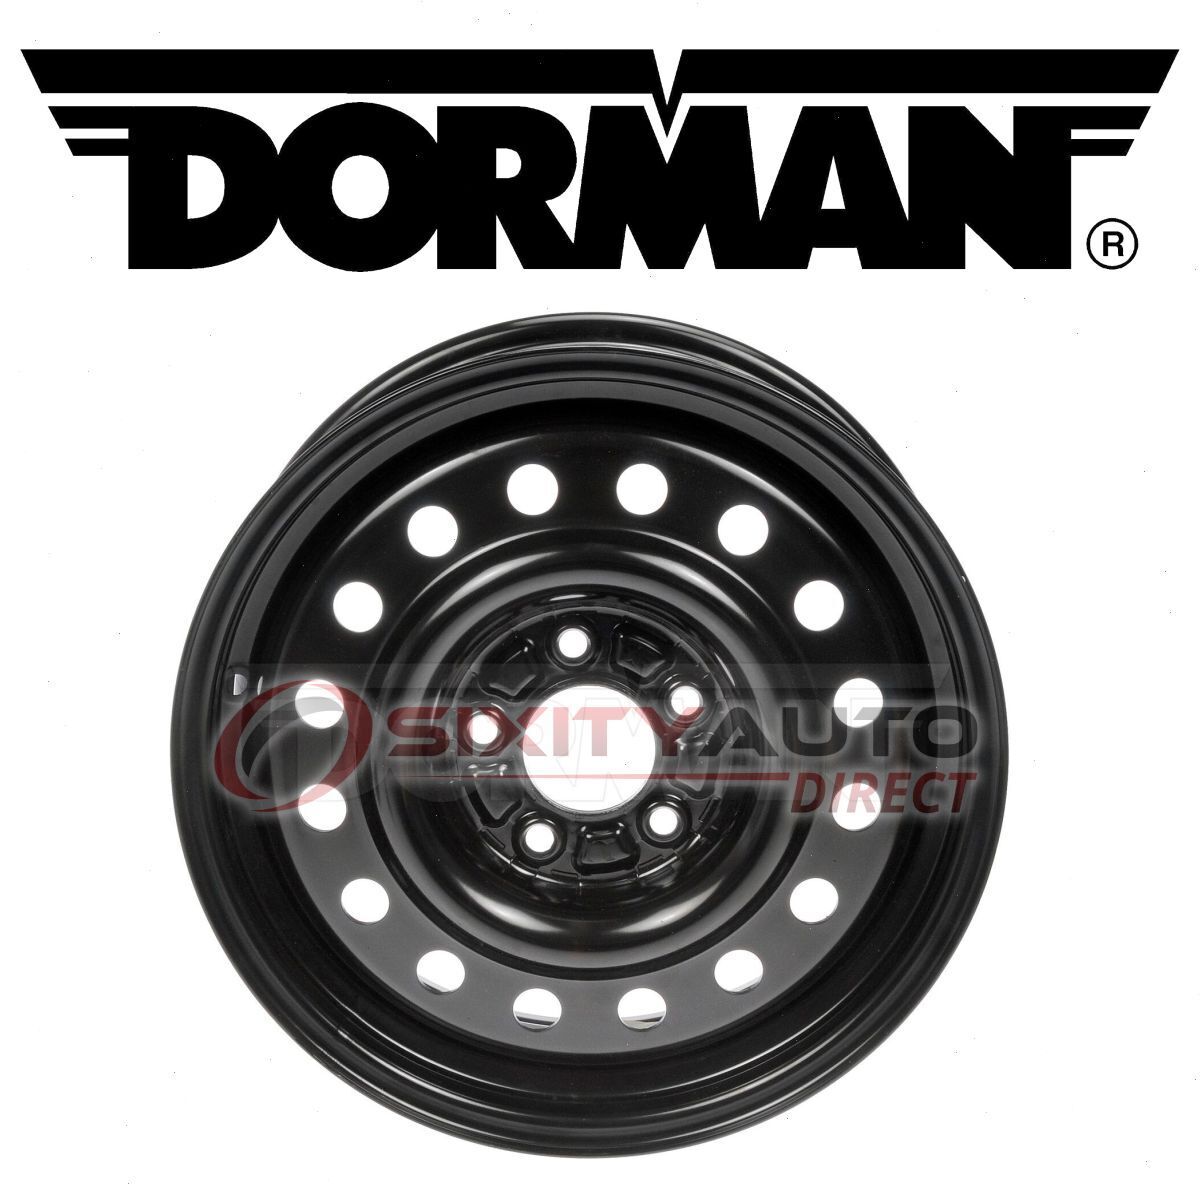 Dorman Wheel for 2005 Buick Terraza Tire  eb